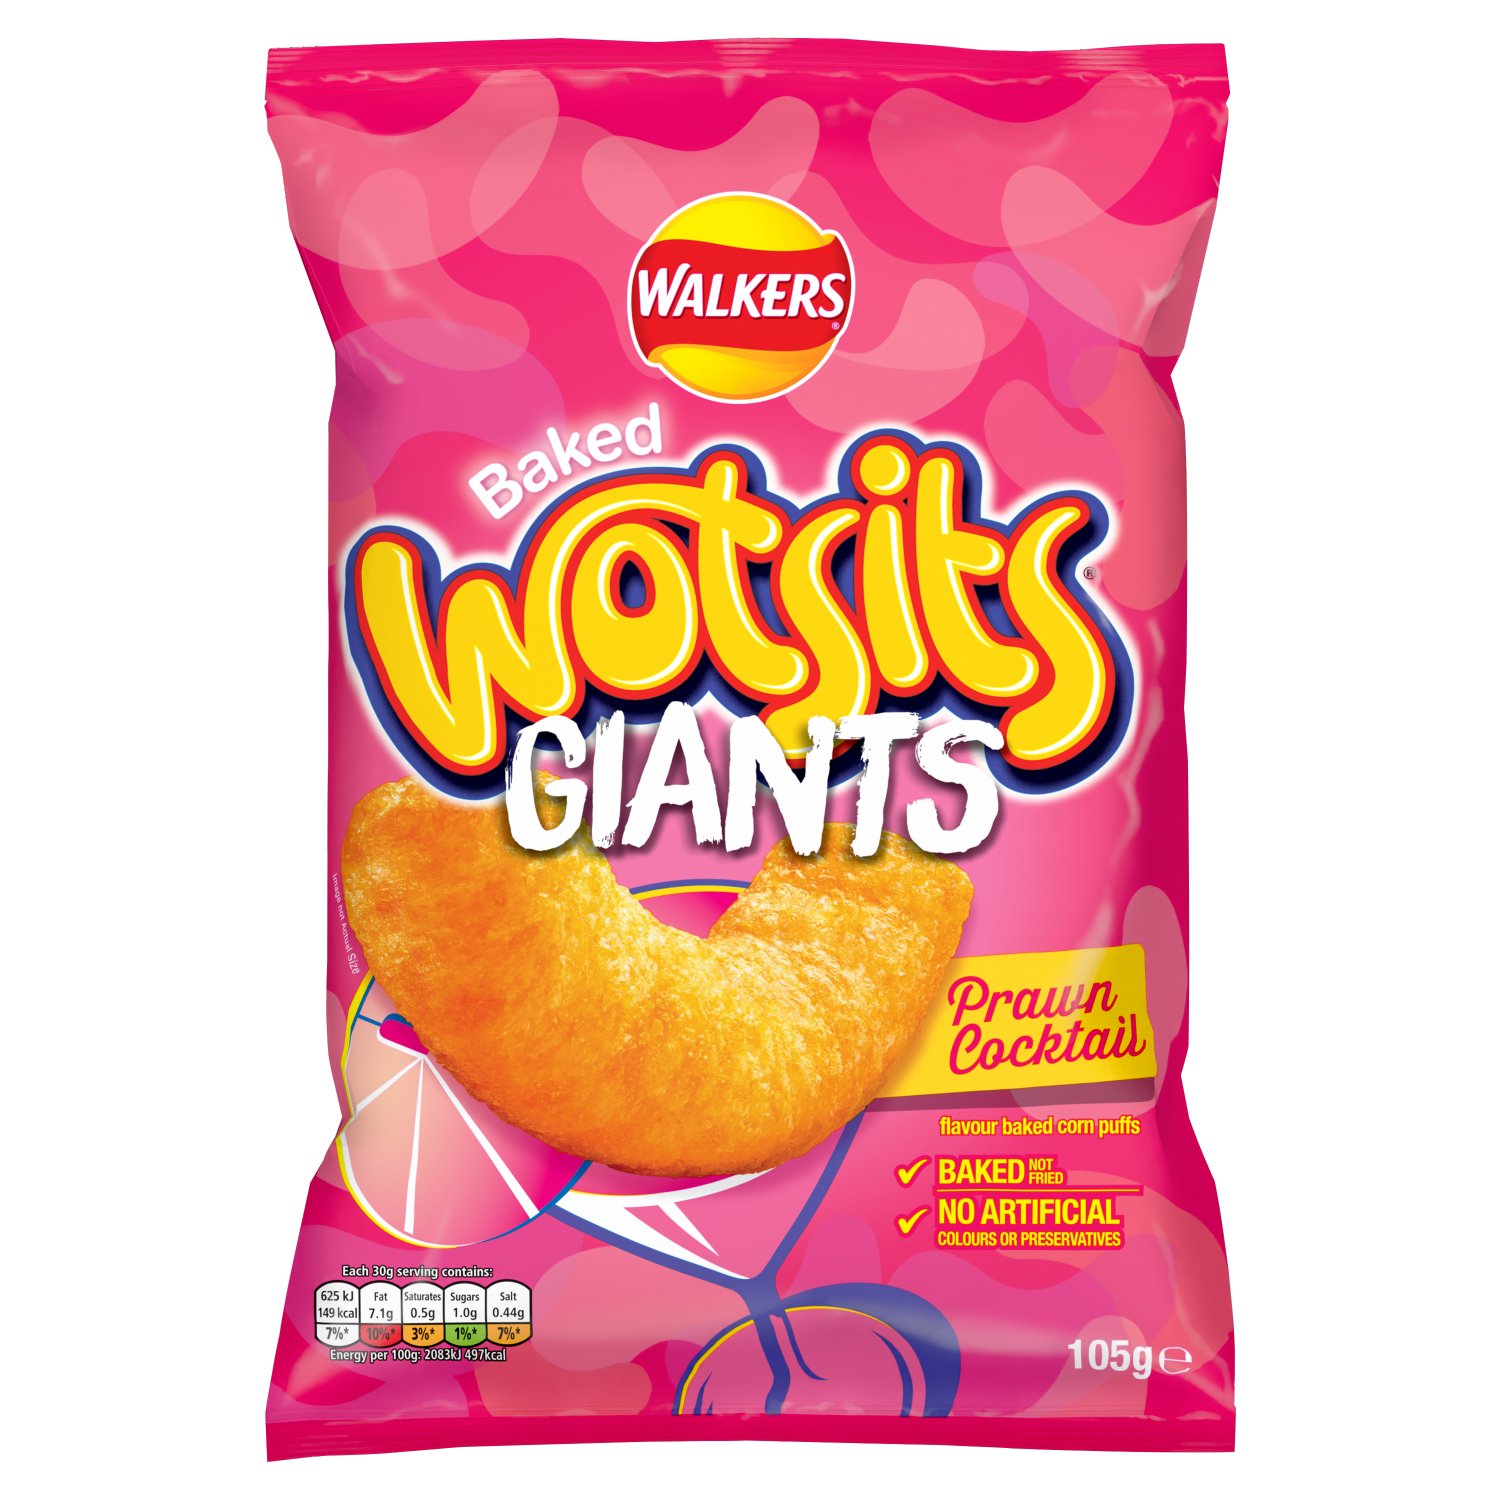 Wotsits Giants Prawn Cocktail Sharing Bag (105 g)